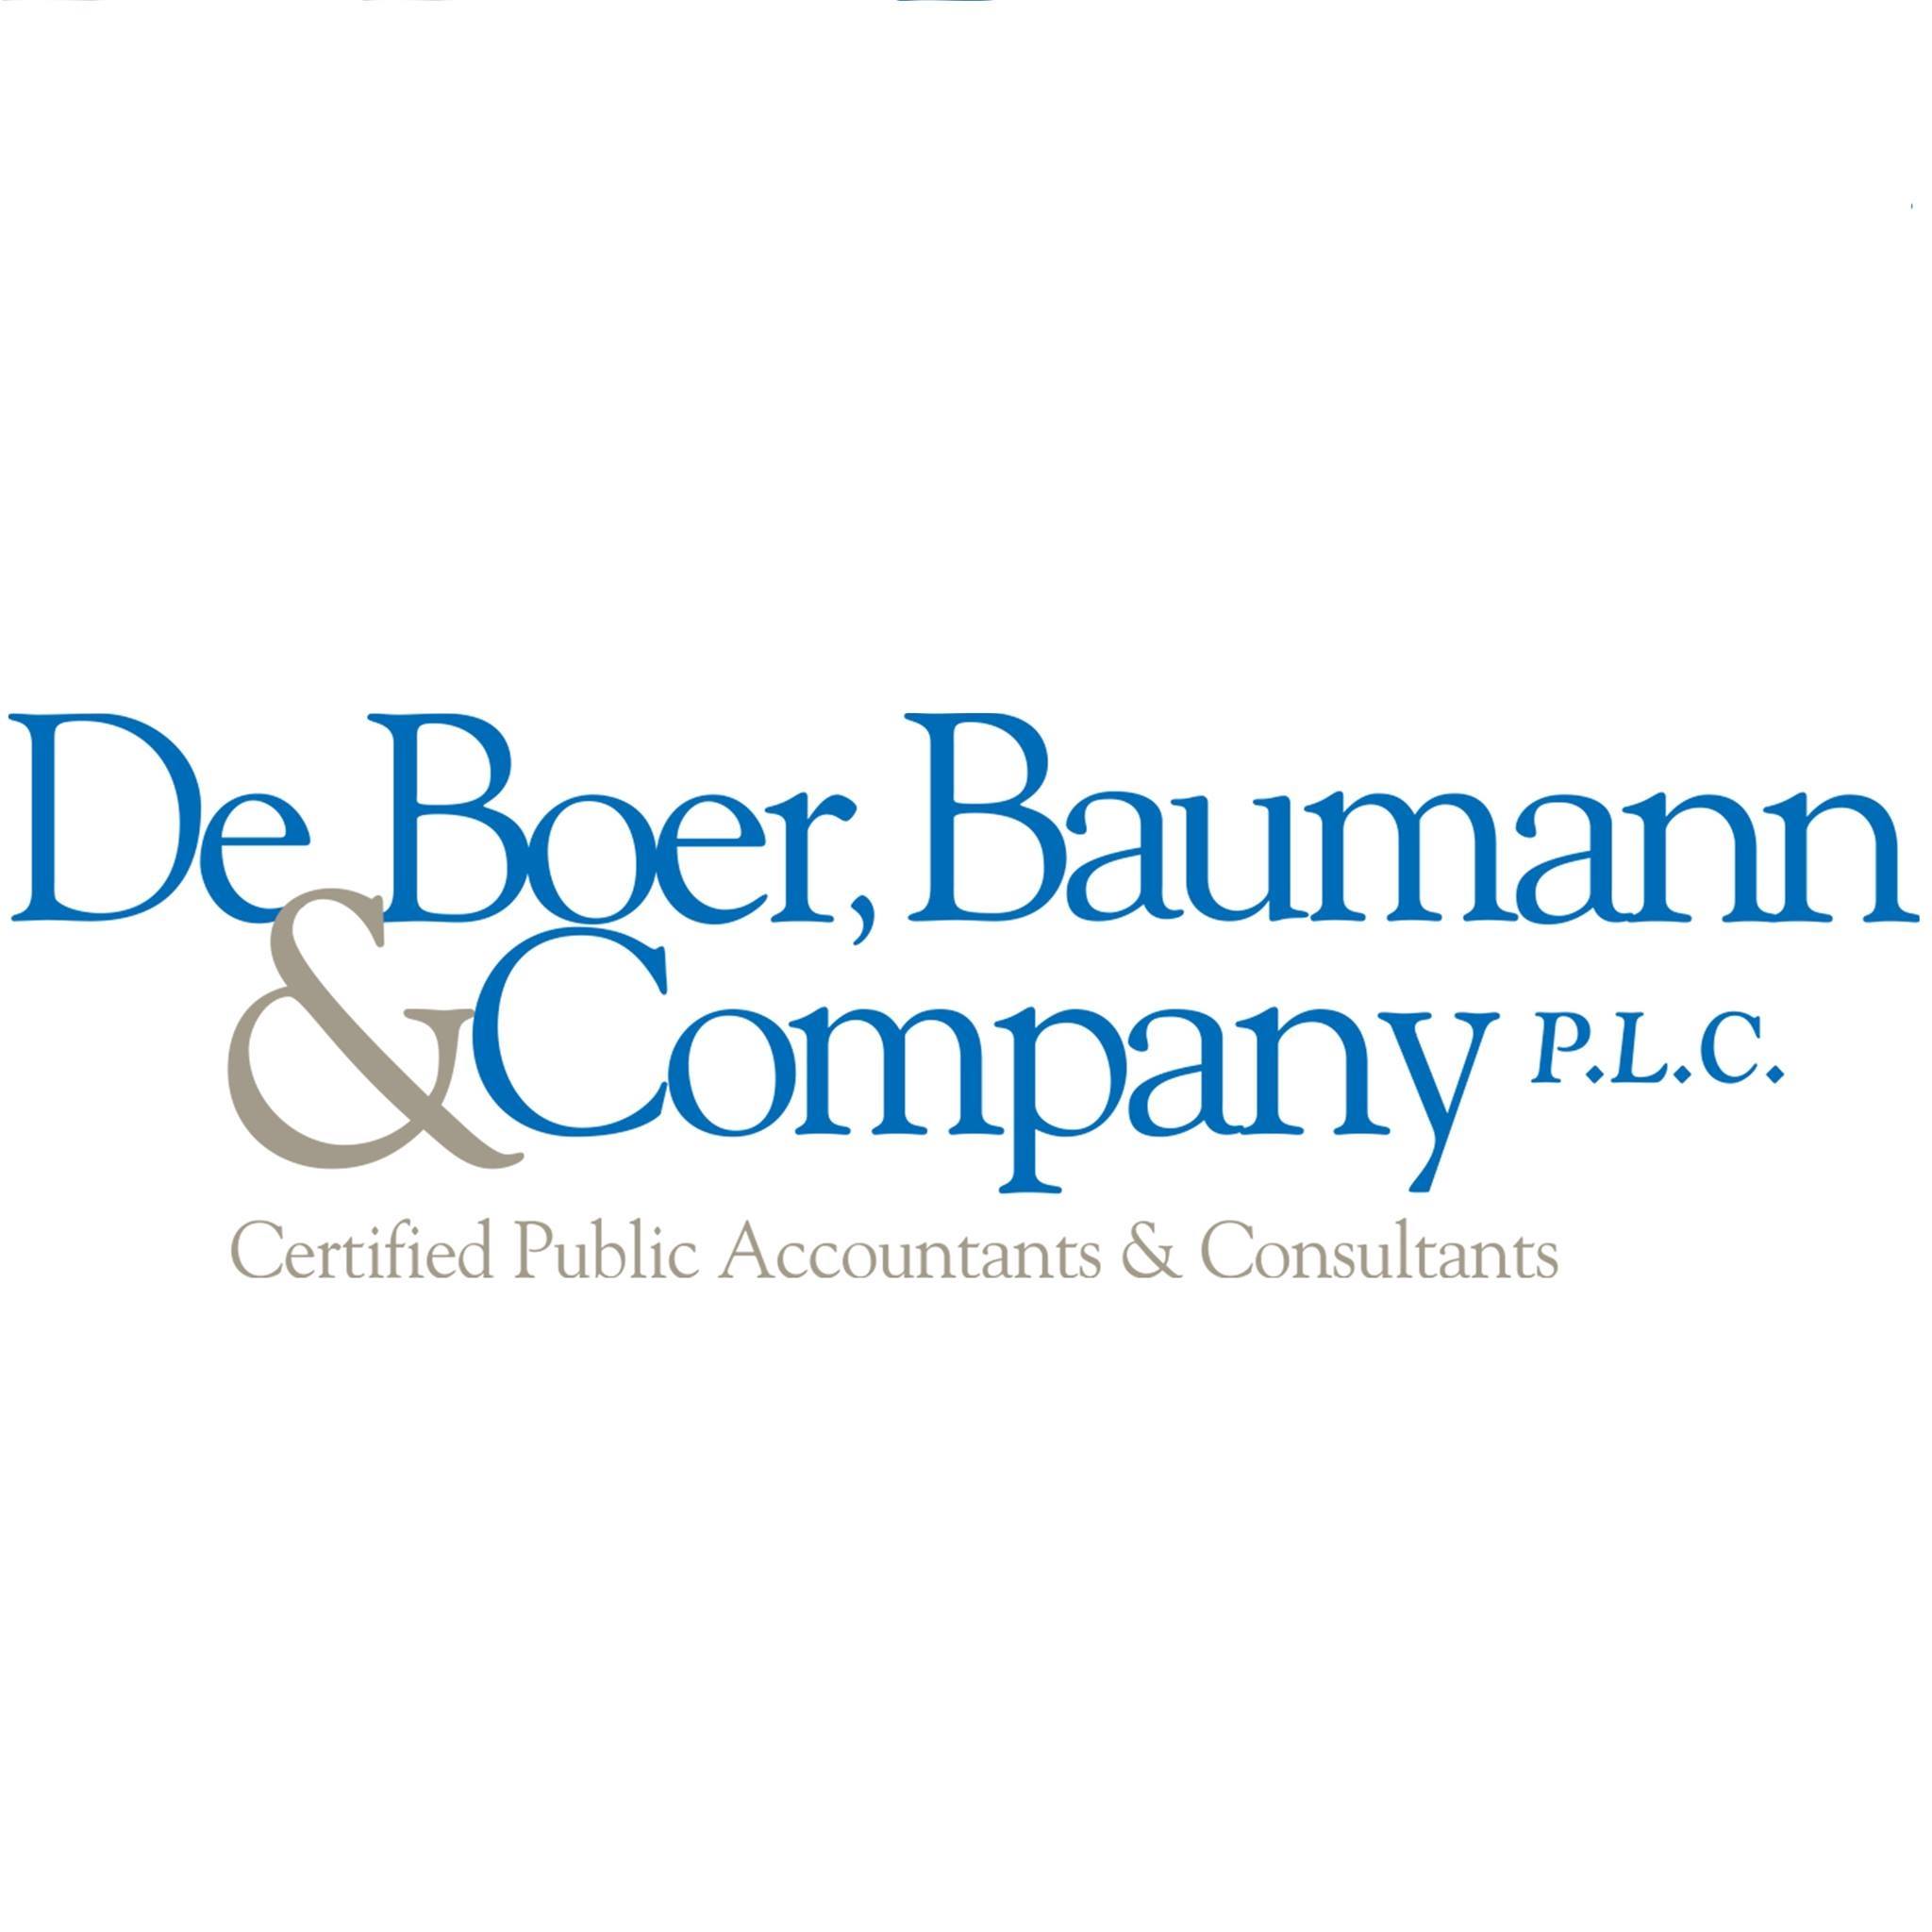 DeBoer, Baumann & Company, PLC